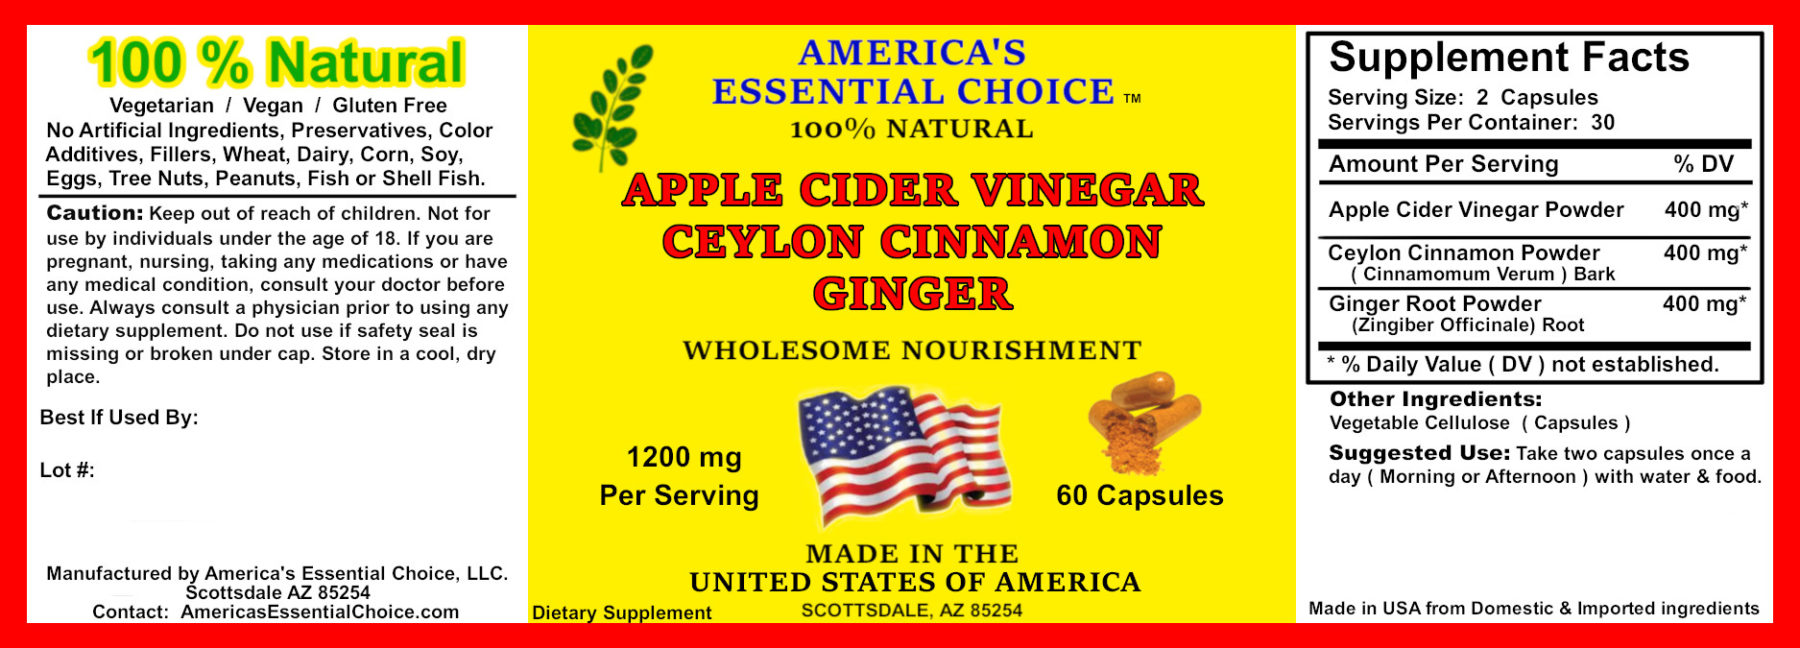 3-in-1 Apple Cider Vinegar Ceylon Cinnamon Ginger Supplement